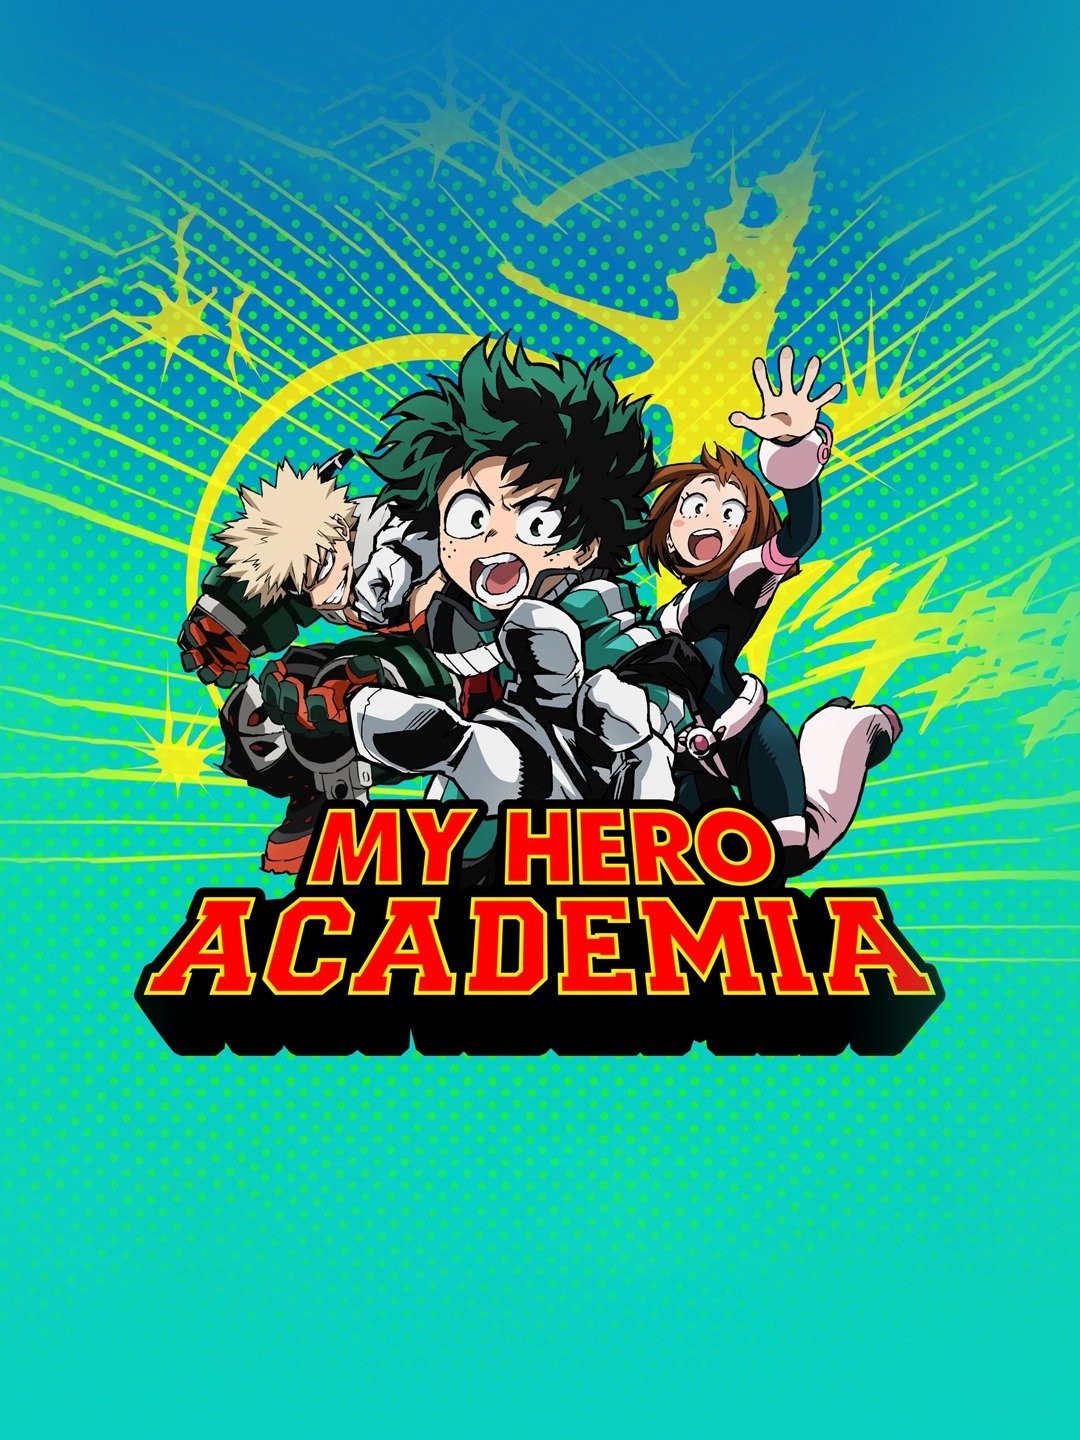 My Home Hero Manga Gets TV Anime - News - Anime News Network